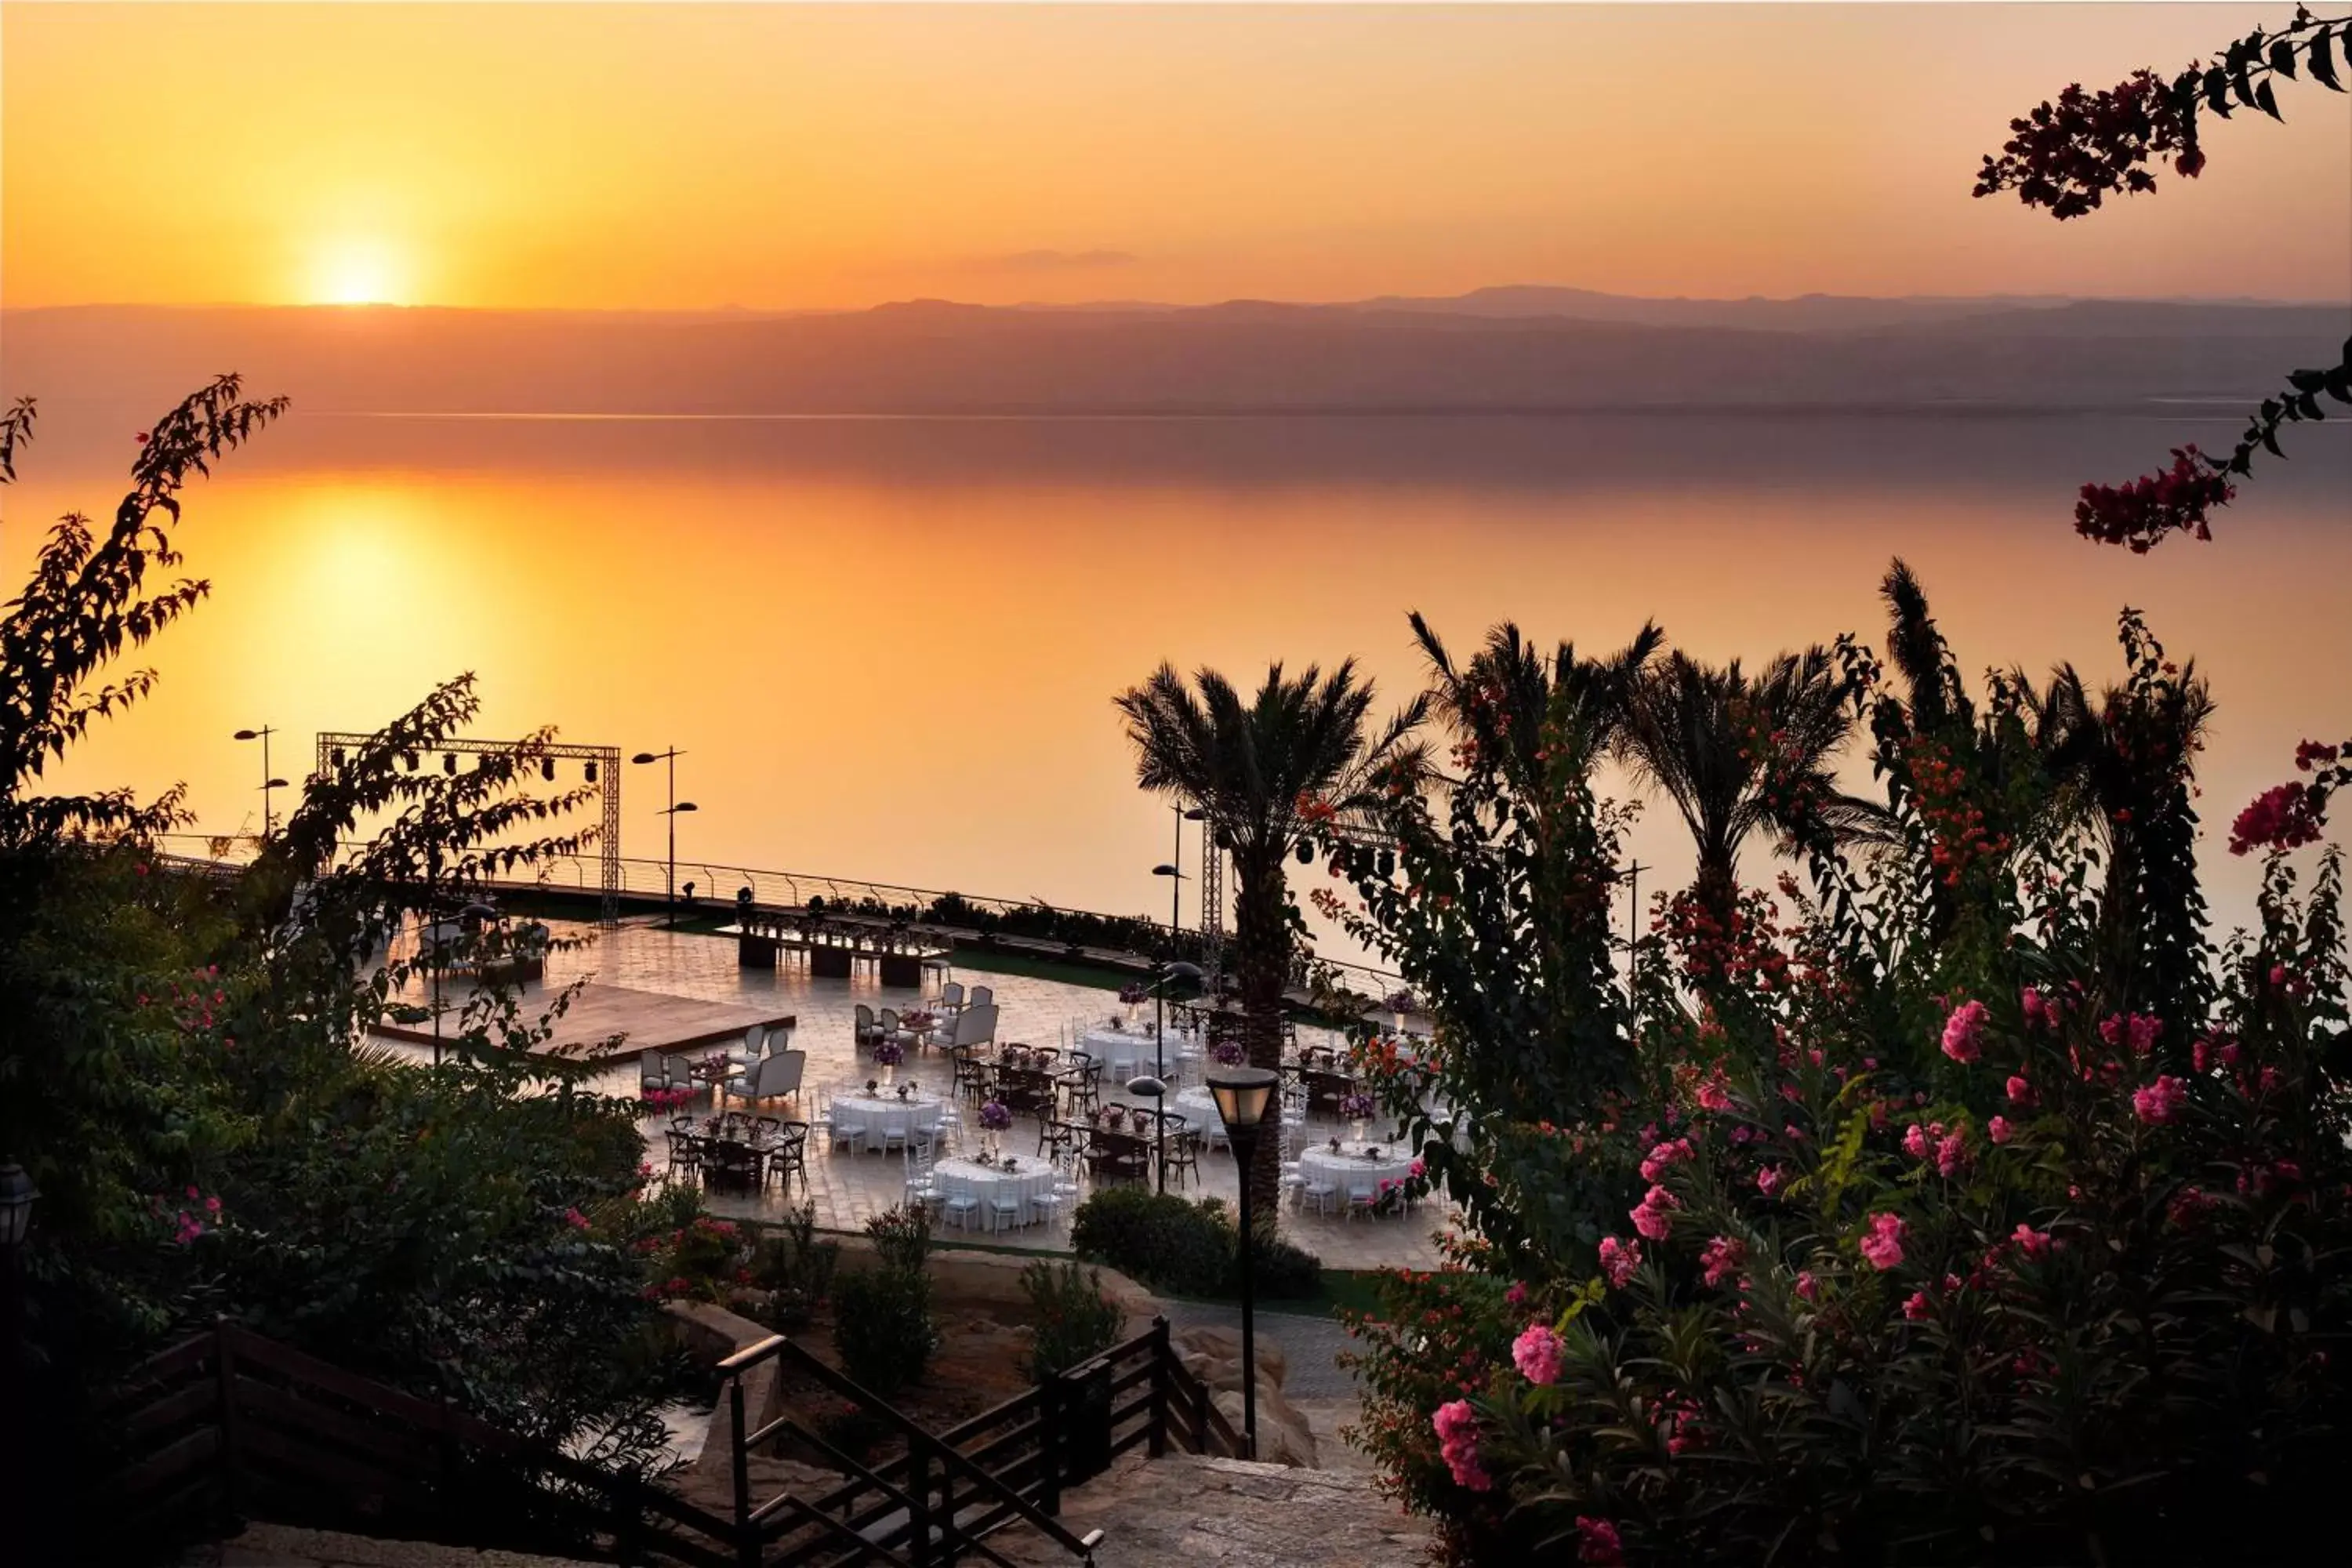 Banquet/Function facilities, Sunrise/Sunset in Dead Sea Marriott Resort & Spa